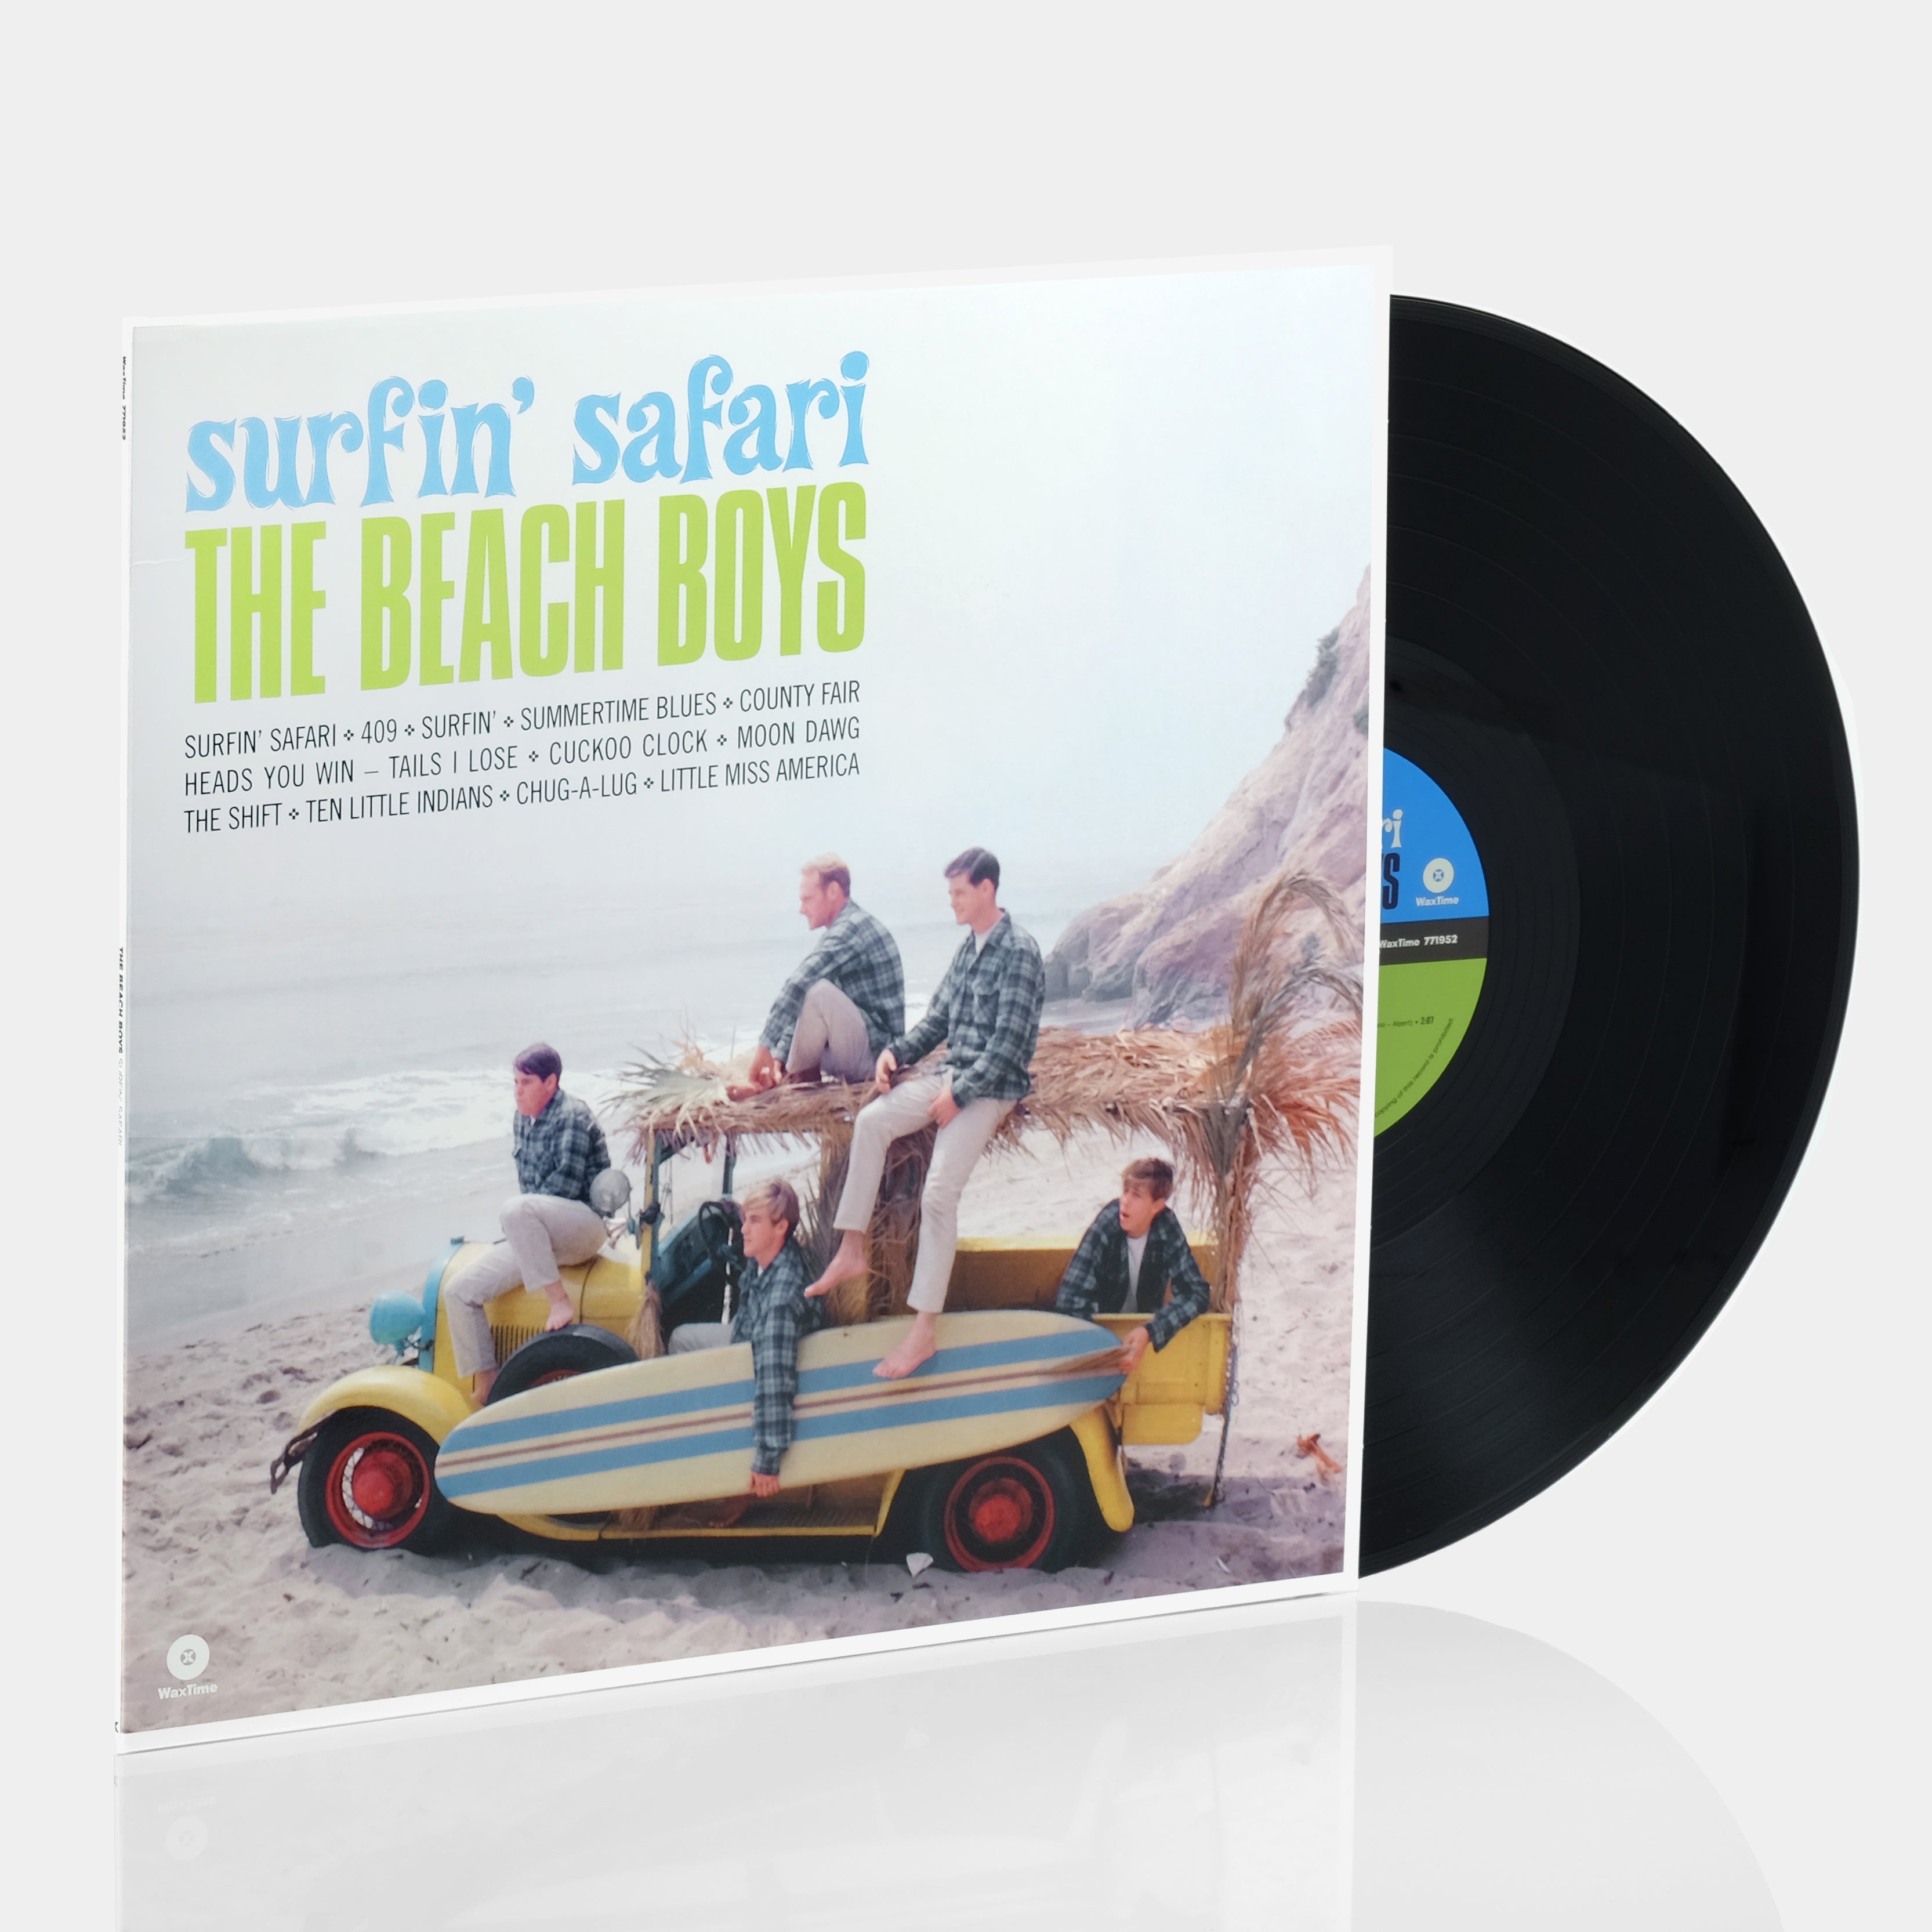 The Beach Boys - Surfin' Safari LP Vinyl Record